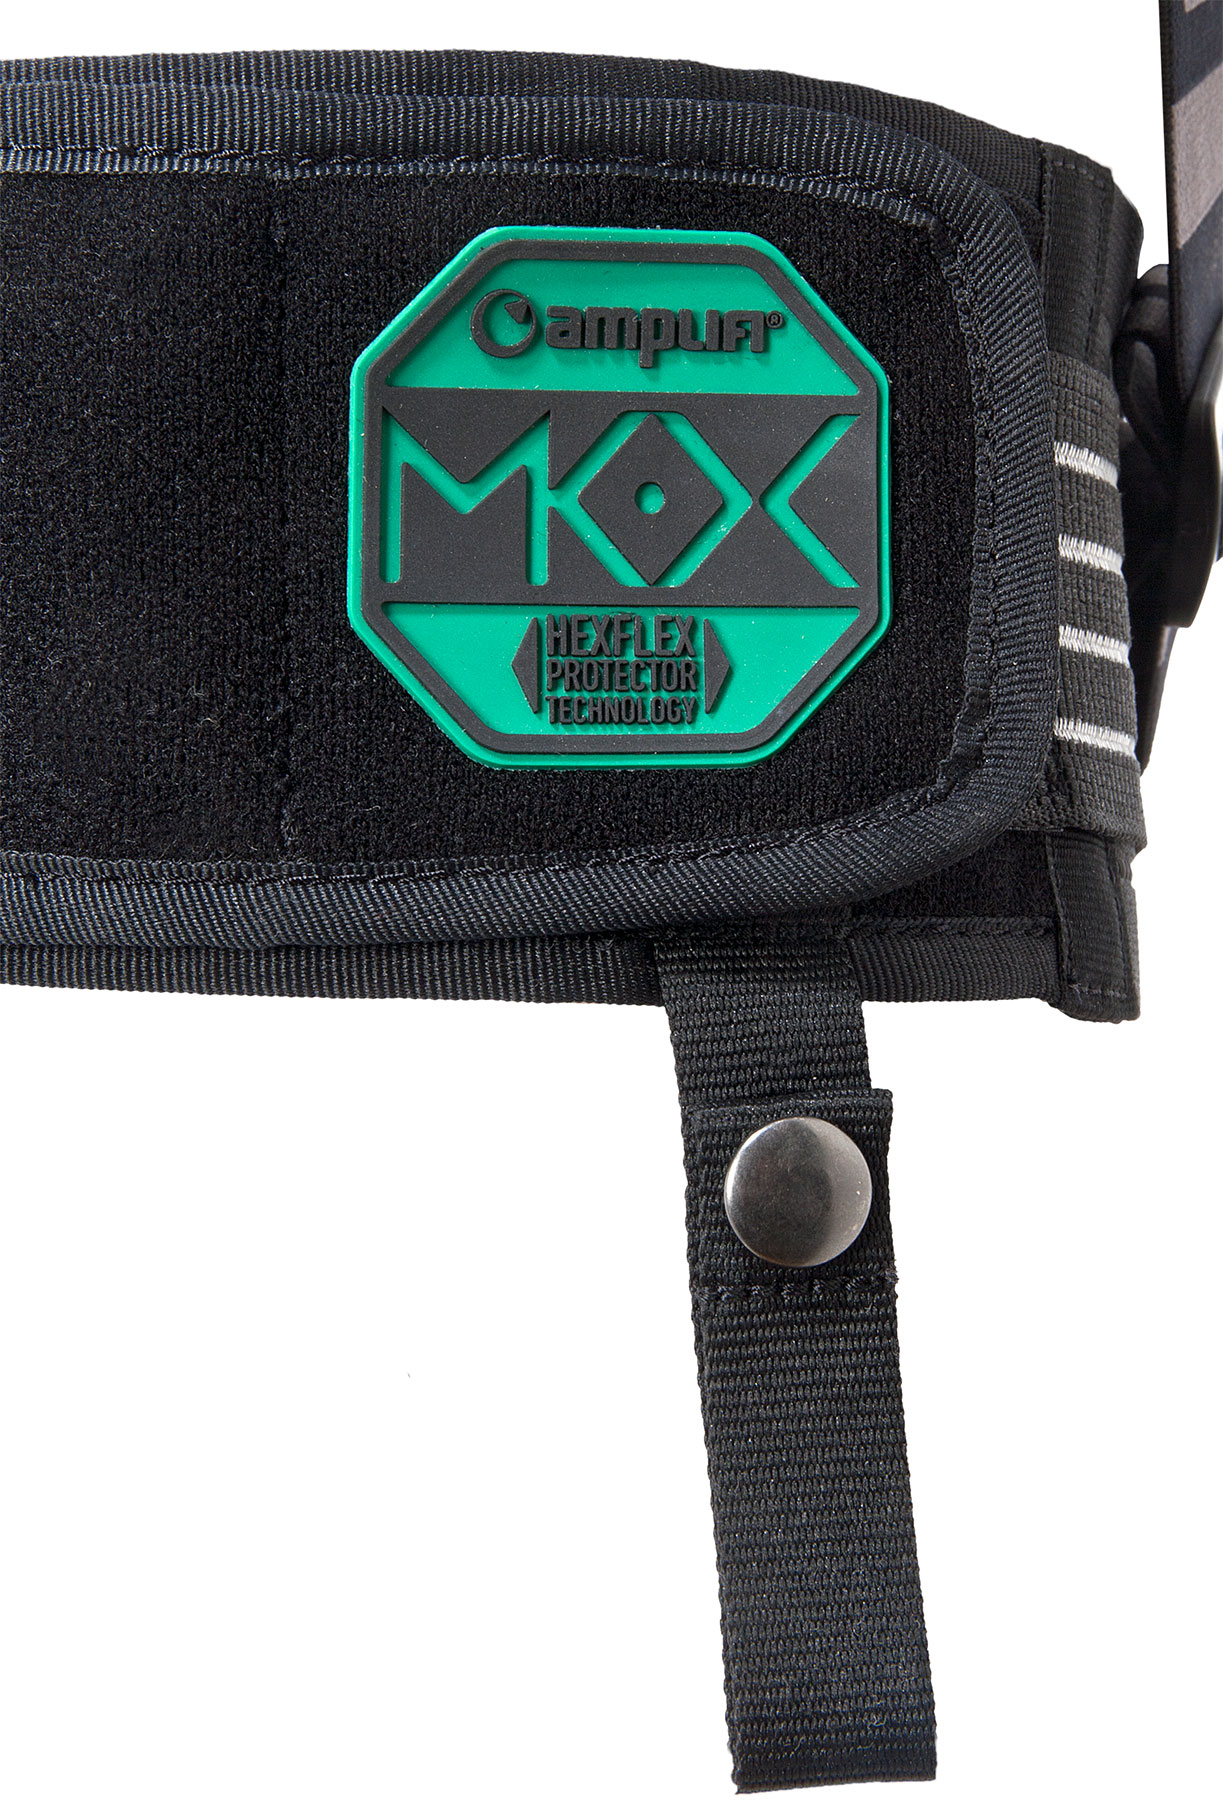 Amplifi MKX pack backprotector black